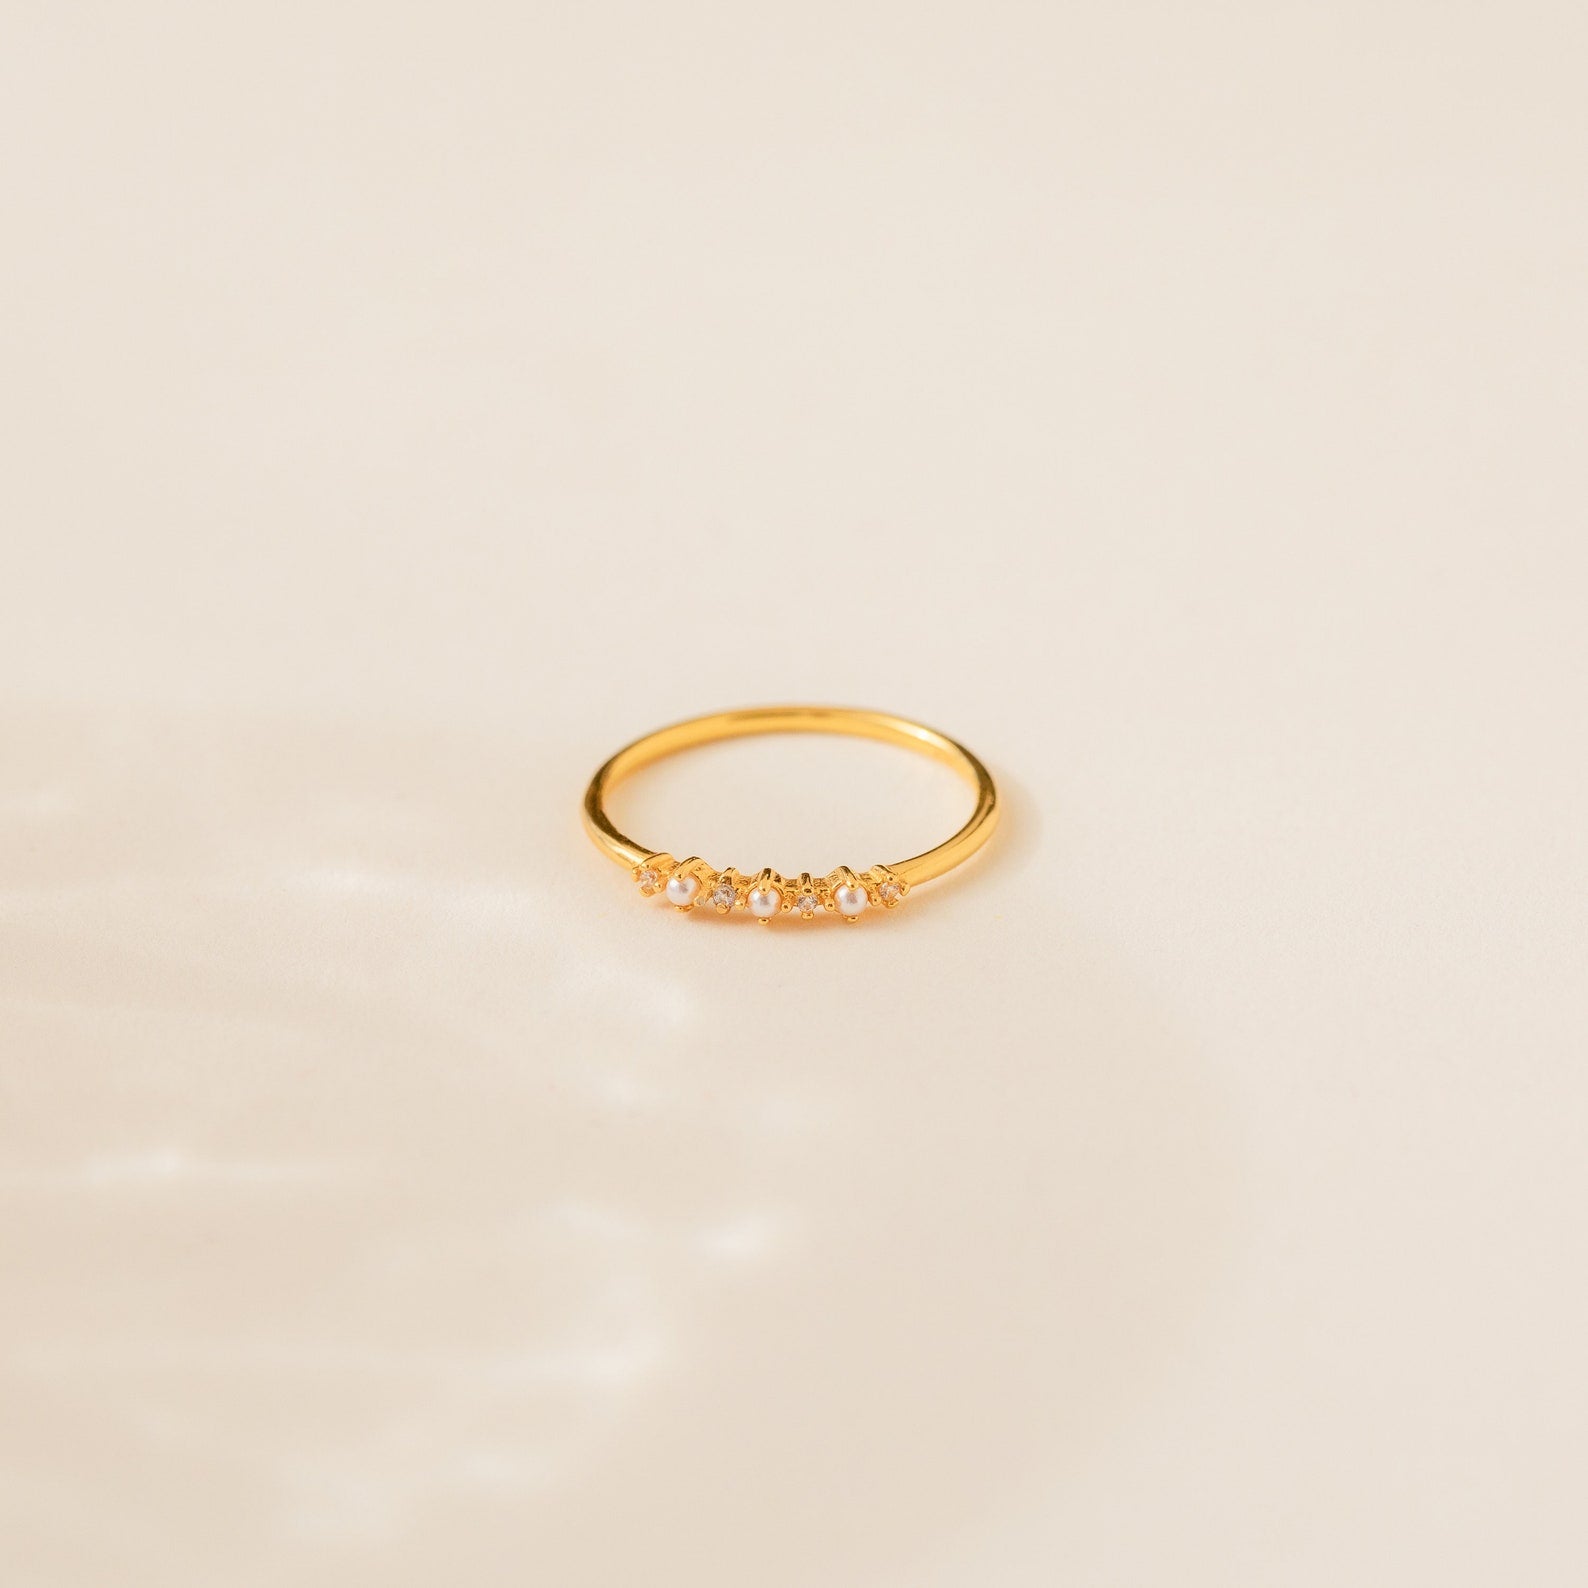 XIAQUJ Cute Minimalist Butterfly Design Ring Delicate Jewellery Gifts for  Women Rings Gold - Walmart.com